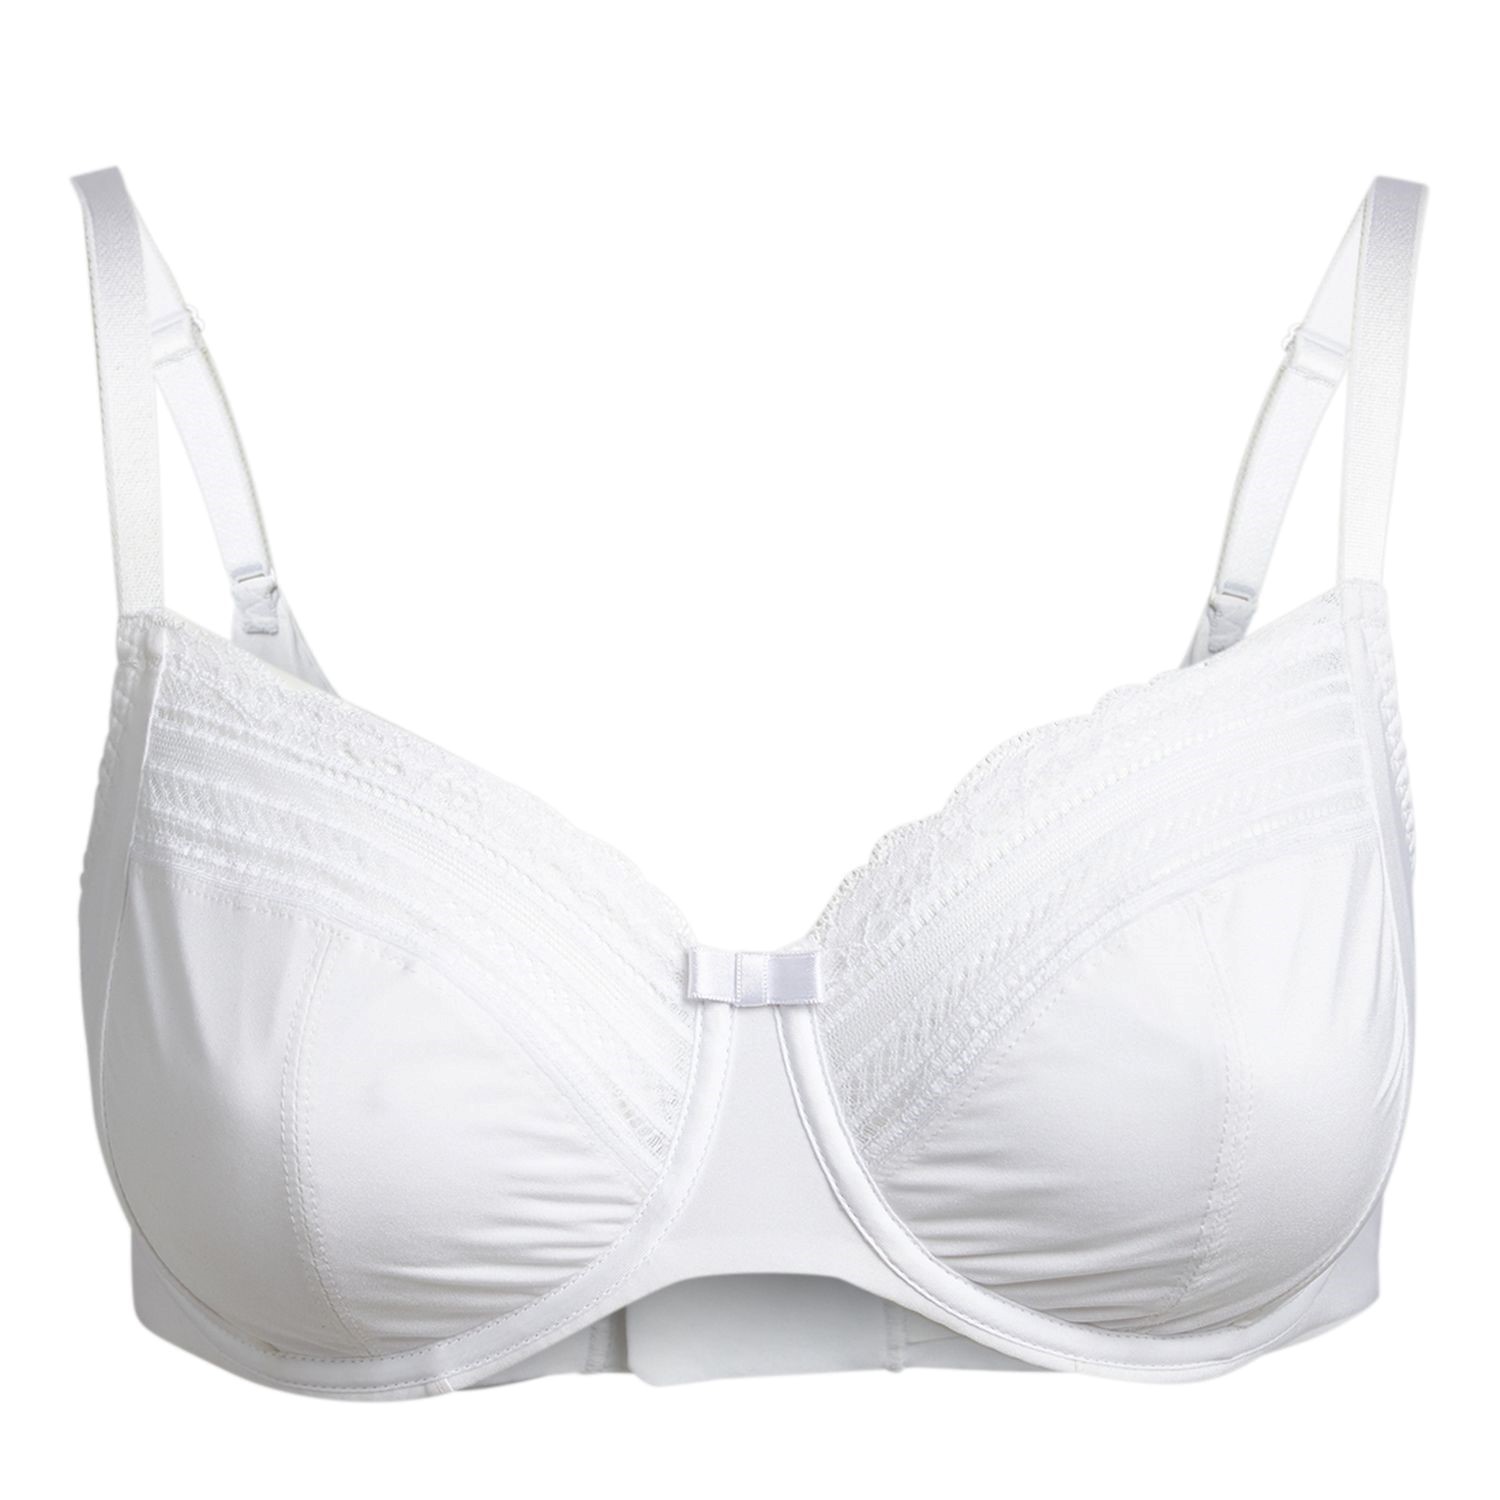 Femilet Helena Bra Full Cup - Wired bra - Bras - Underwear - Timarco.co.uk